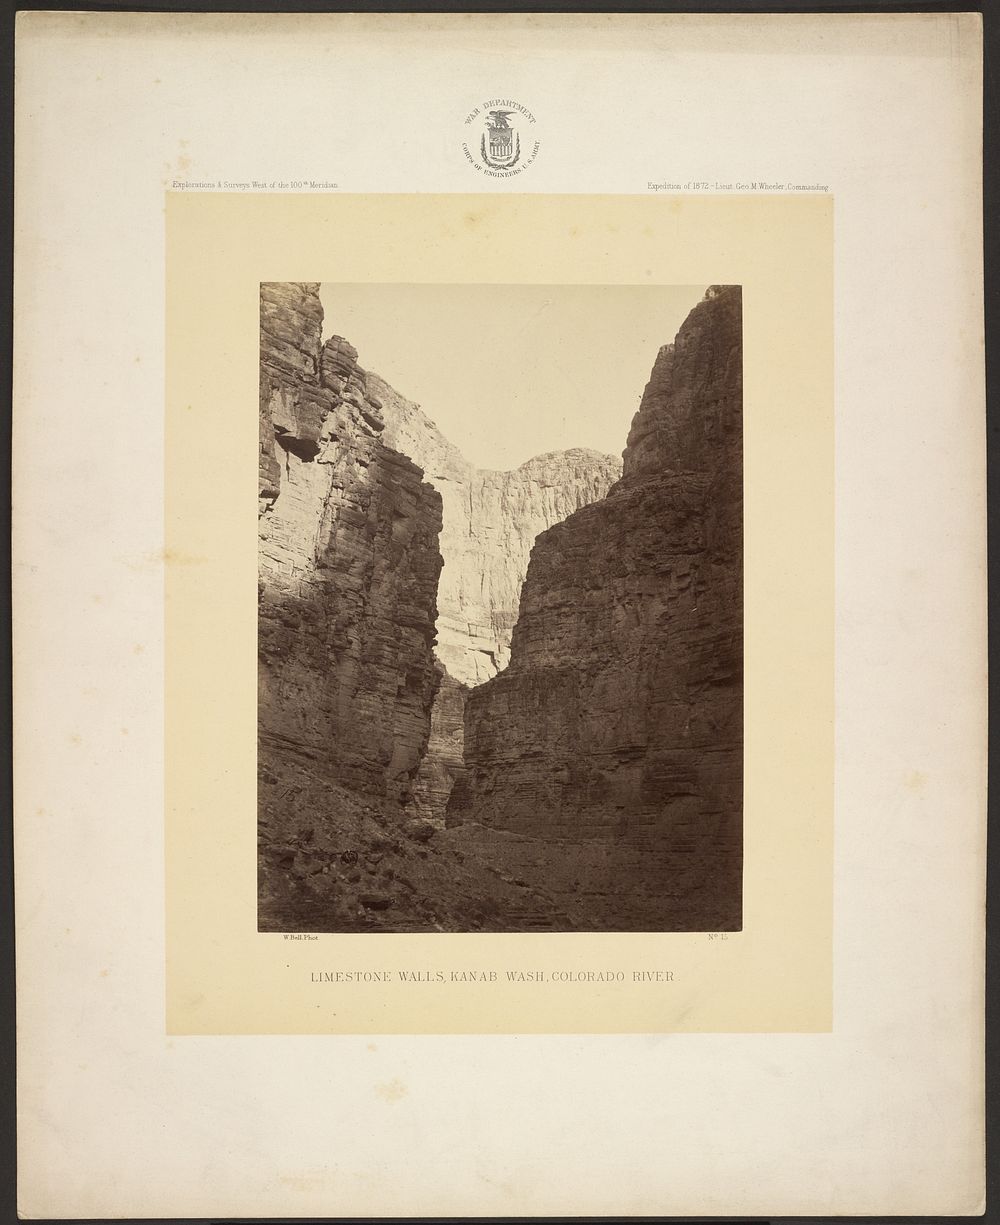 Limestone Walls, Kanab Wash, Colorado River by William H Bell